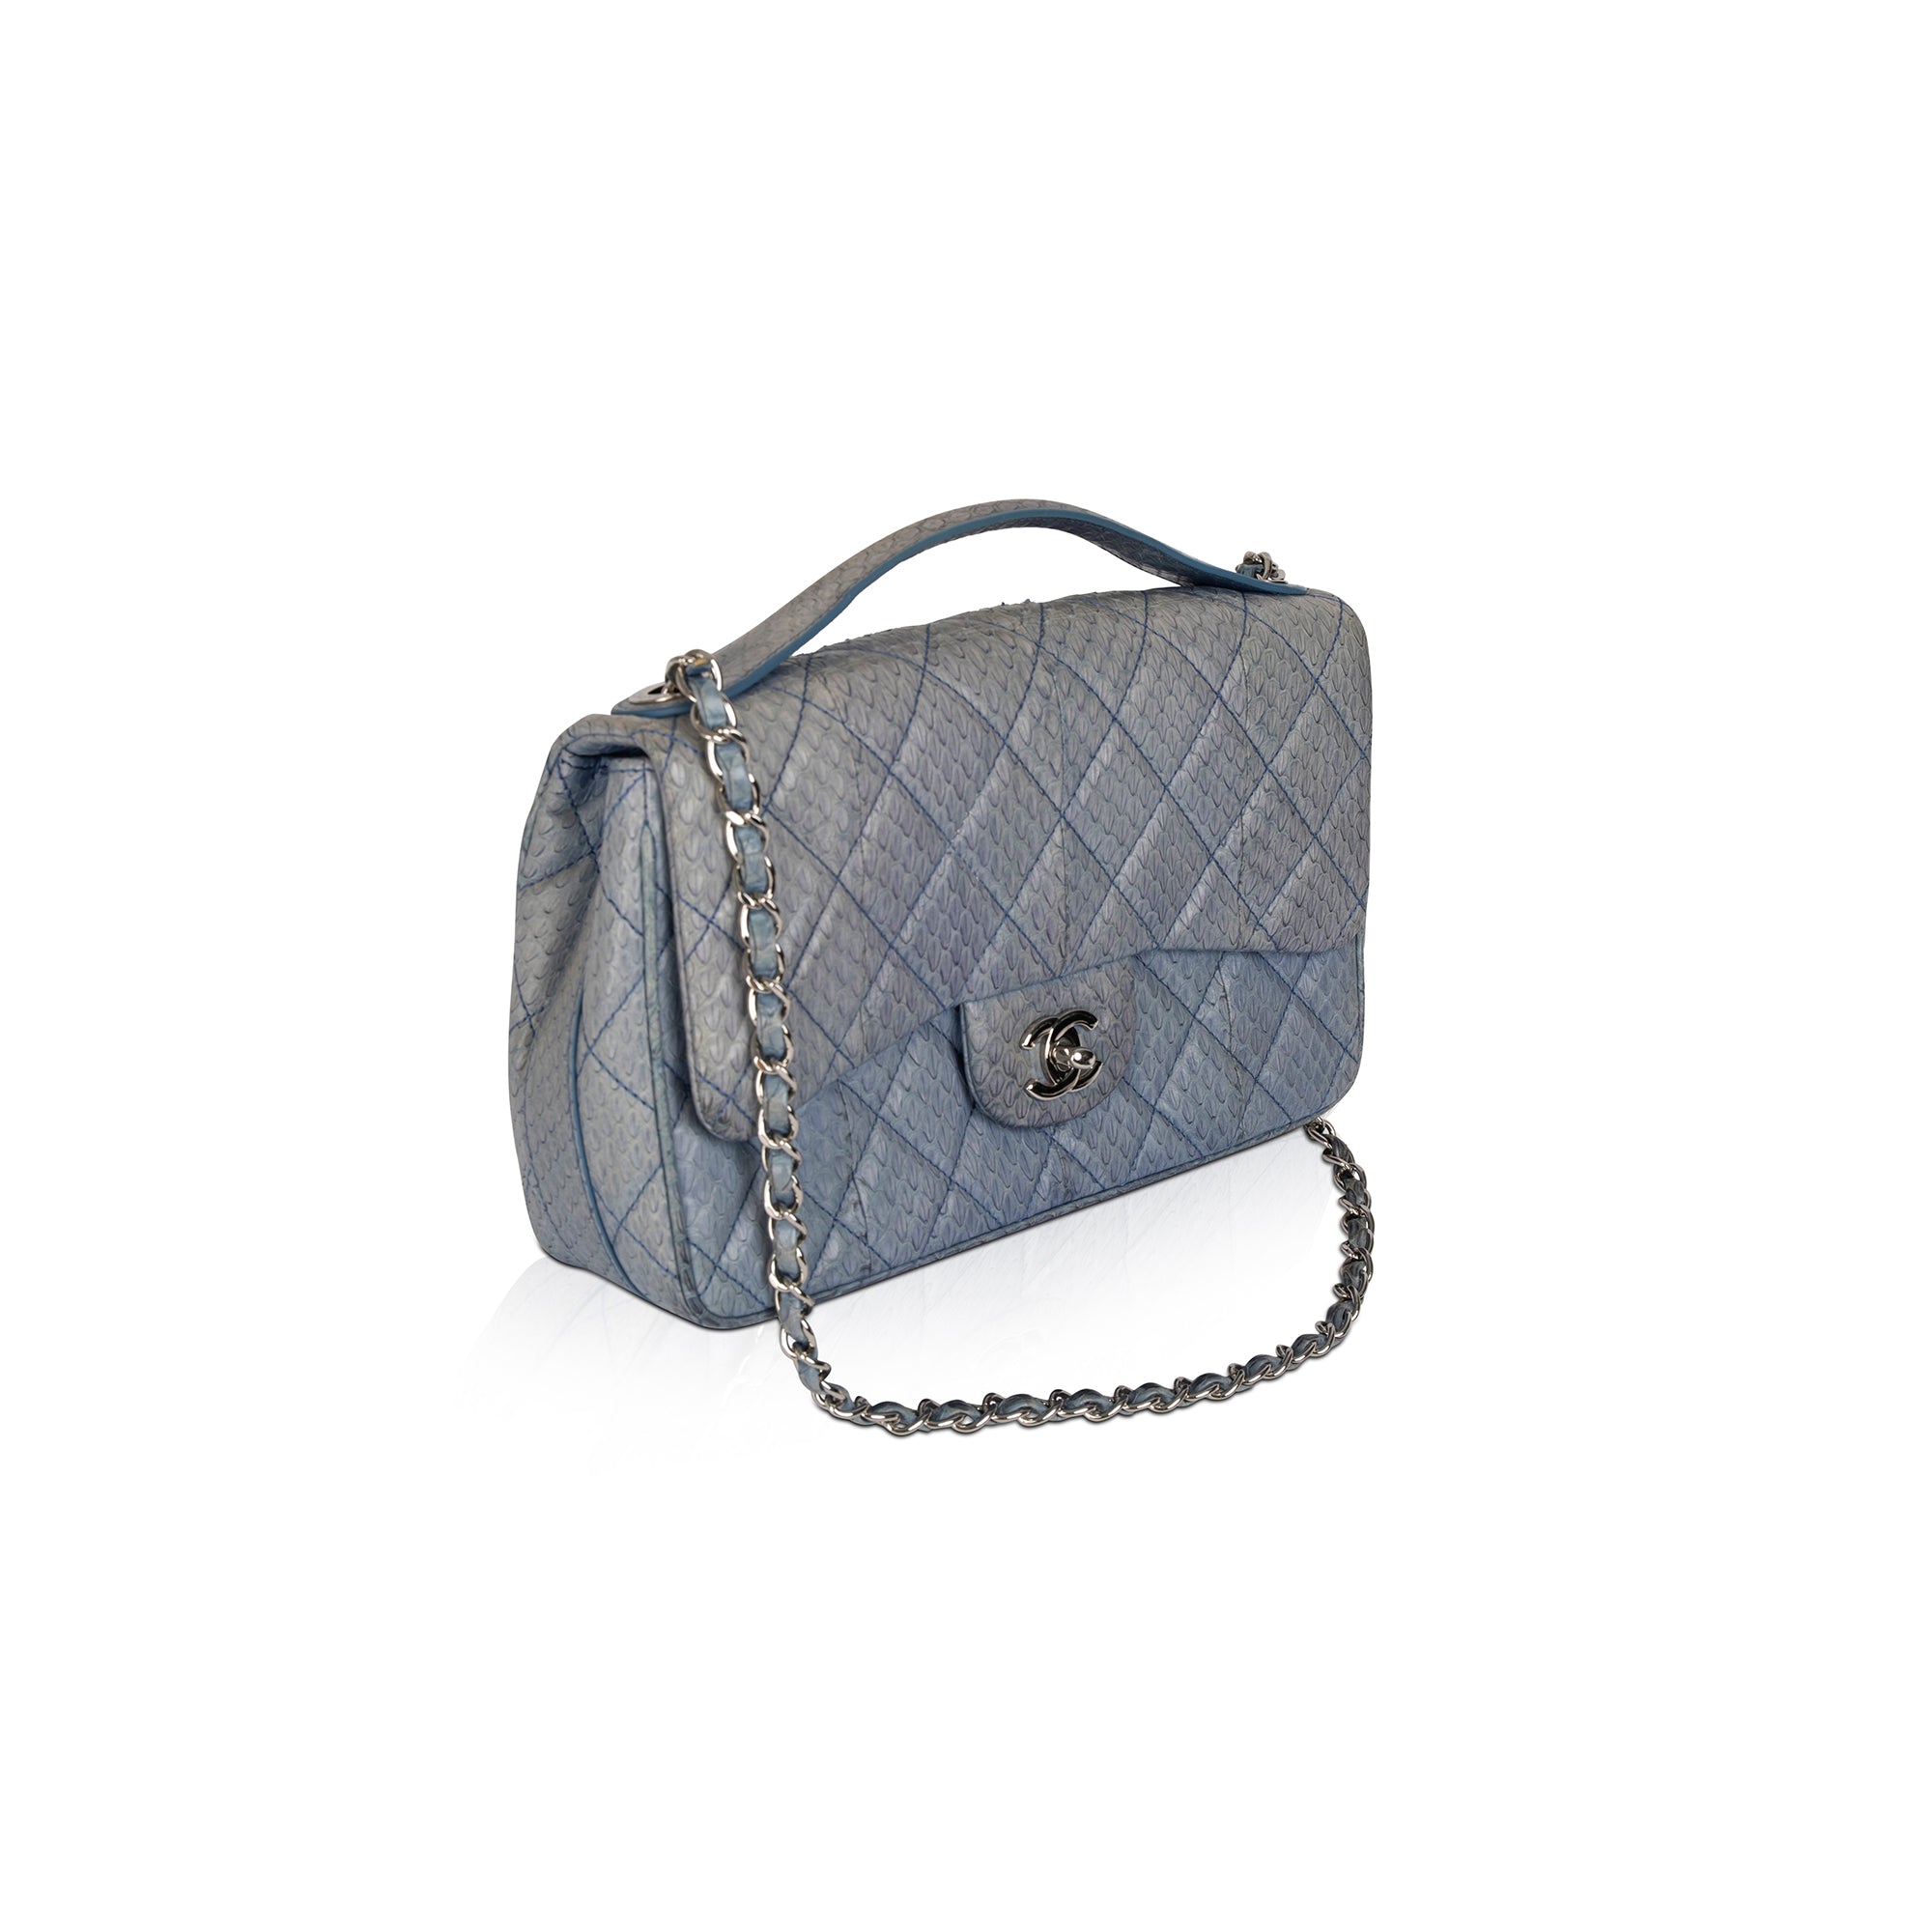 Chanel easy flap bag - Gem